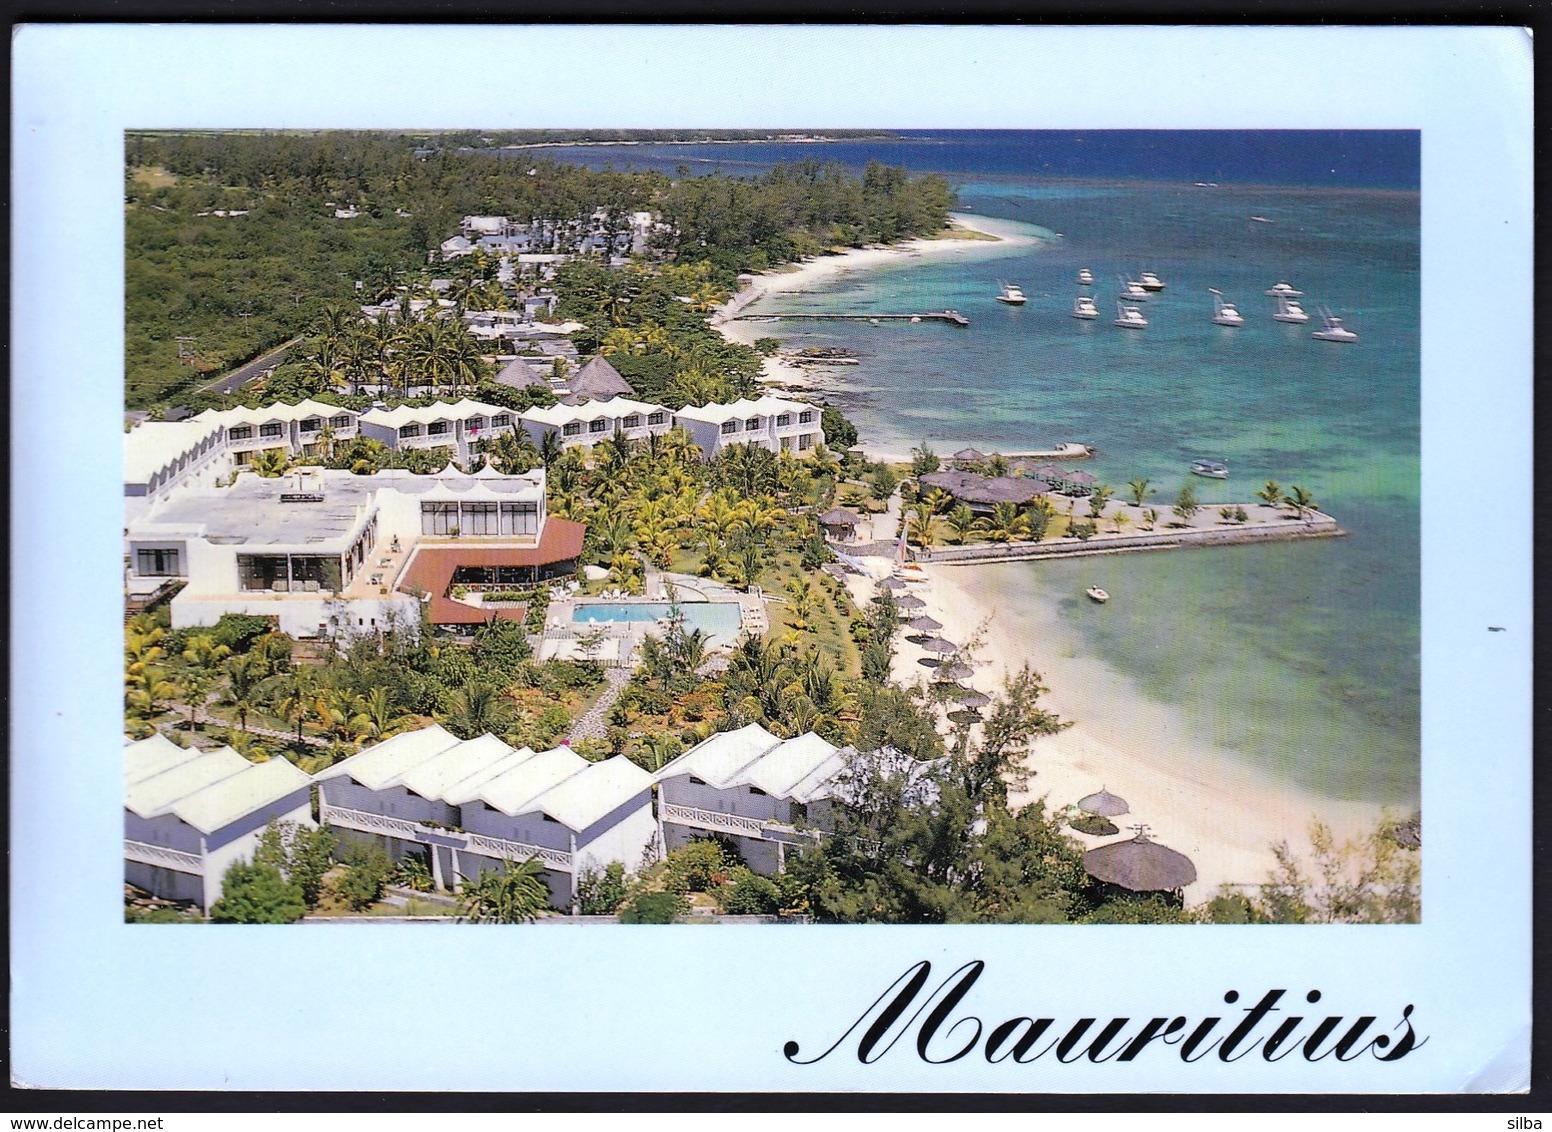 Mauritius - Ile Maurice - Mont Choisy / Tourism, Beach, Swimming Pool, Boats - Mauritius